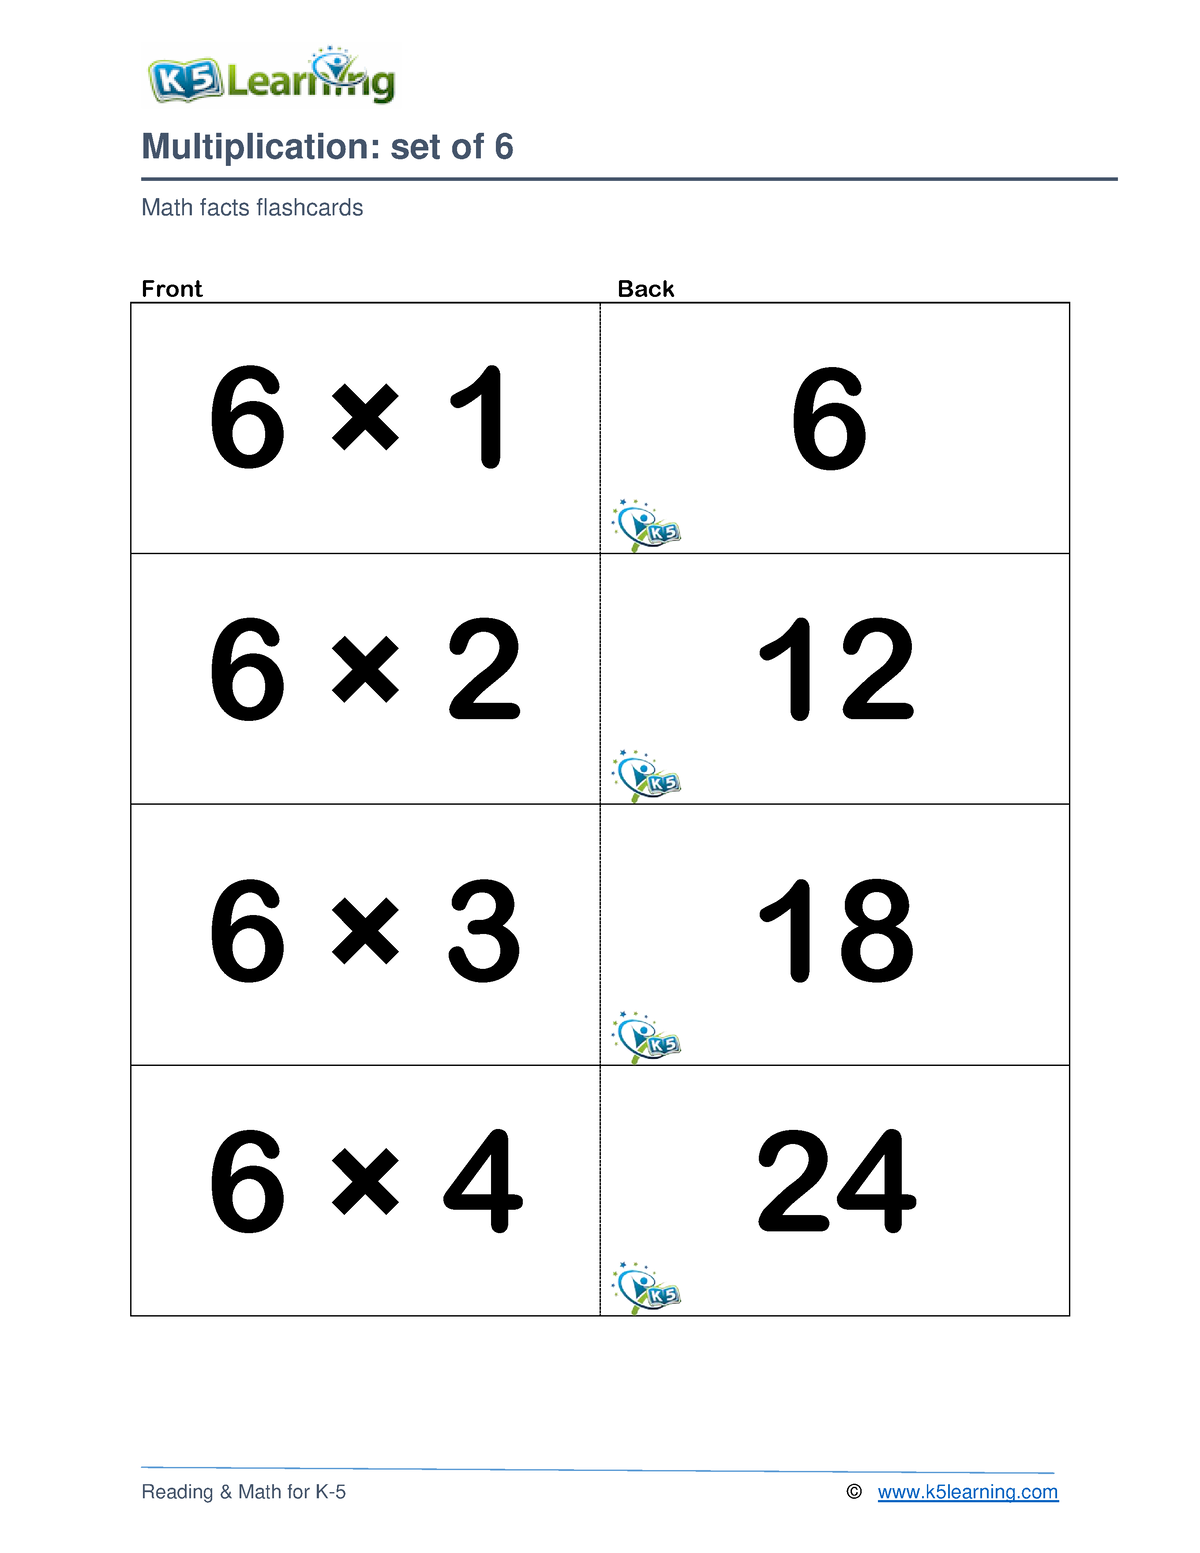 multiplication-set-6-7-8-math-facts-flashcards-front-back-6-1-6-6-2-12-6-3-18-6-4-24